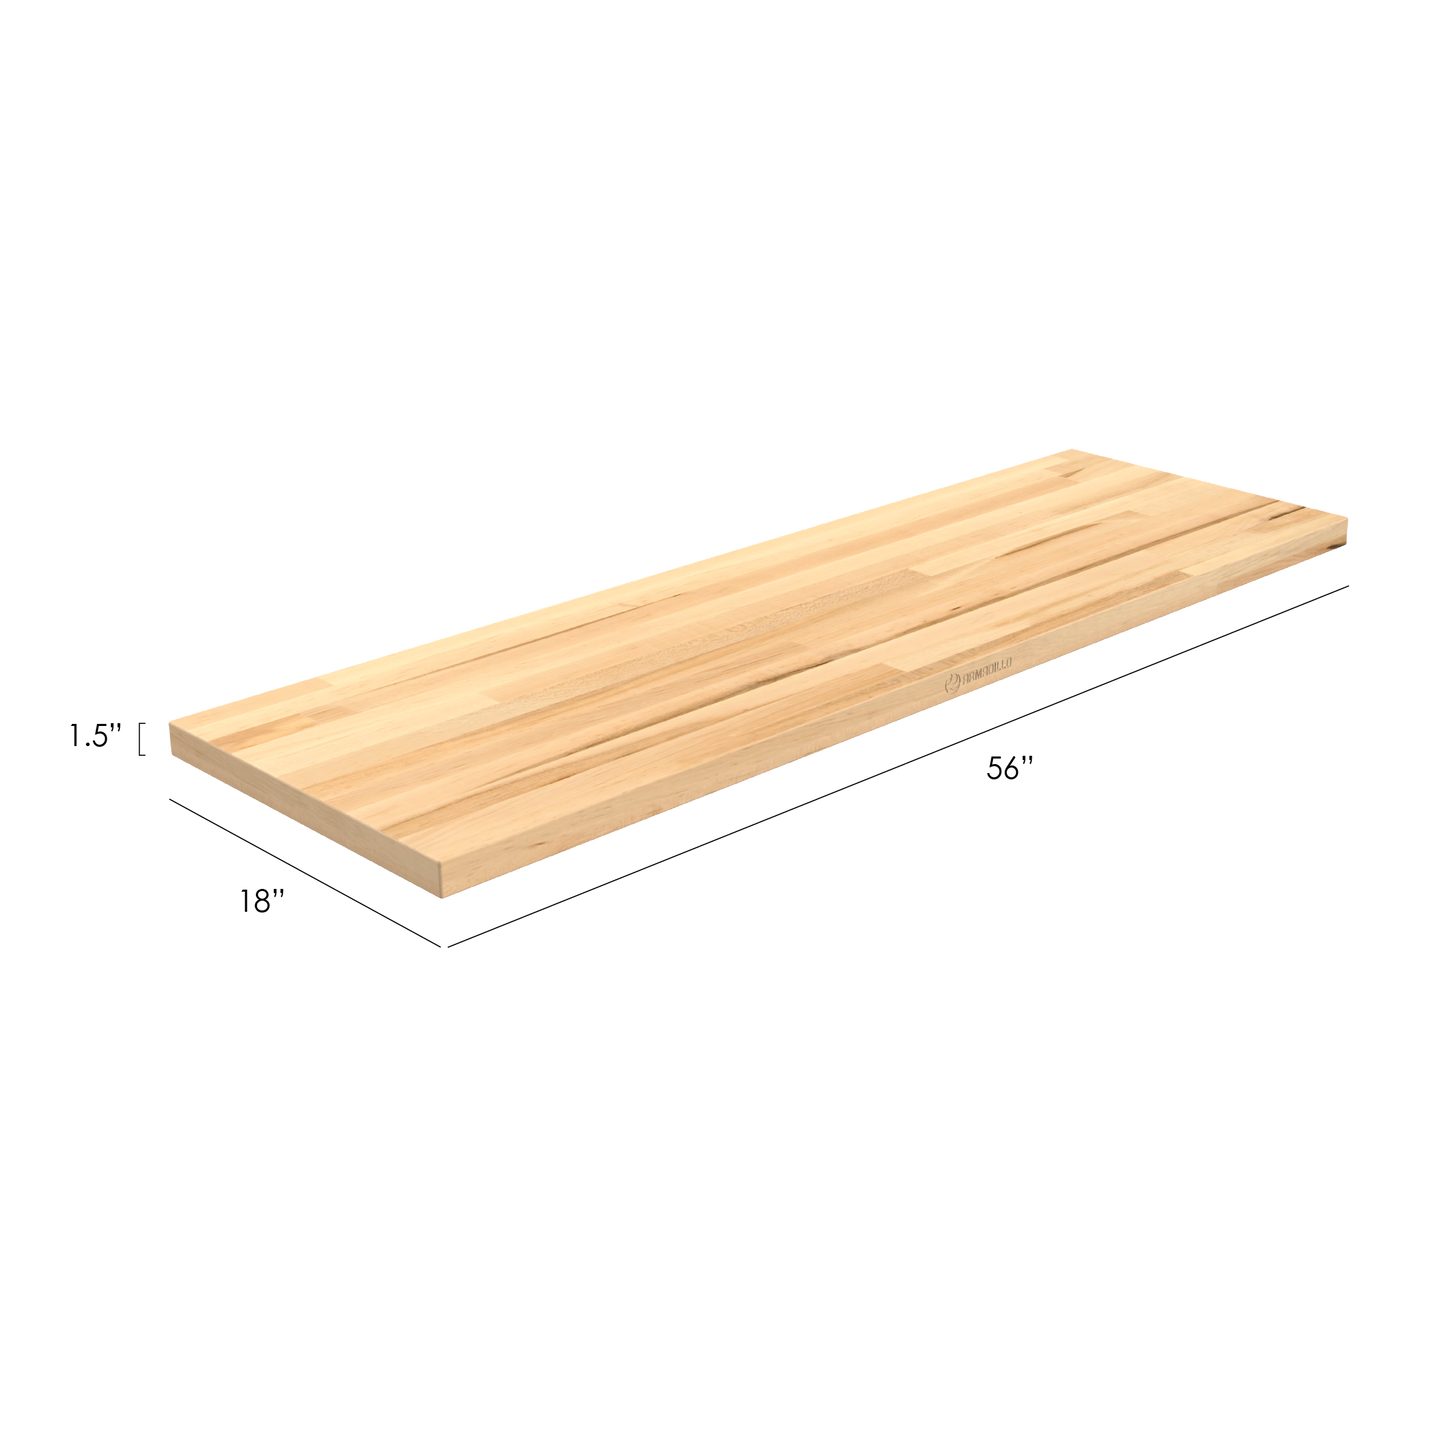 56-inch Hardwood Workbench Top